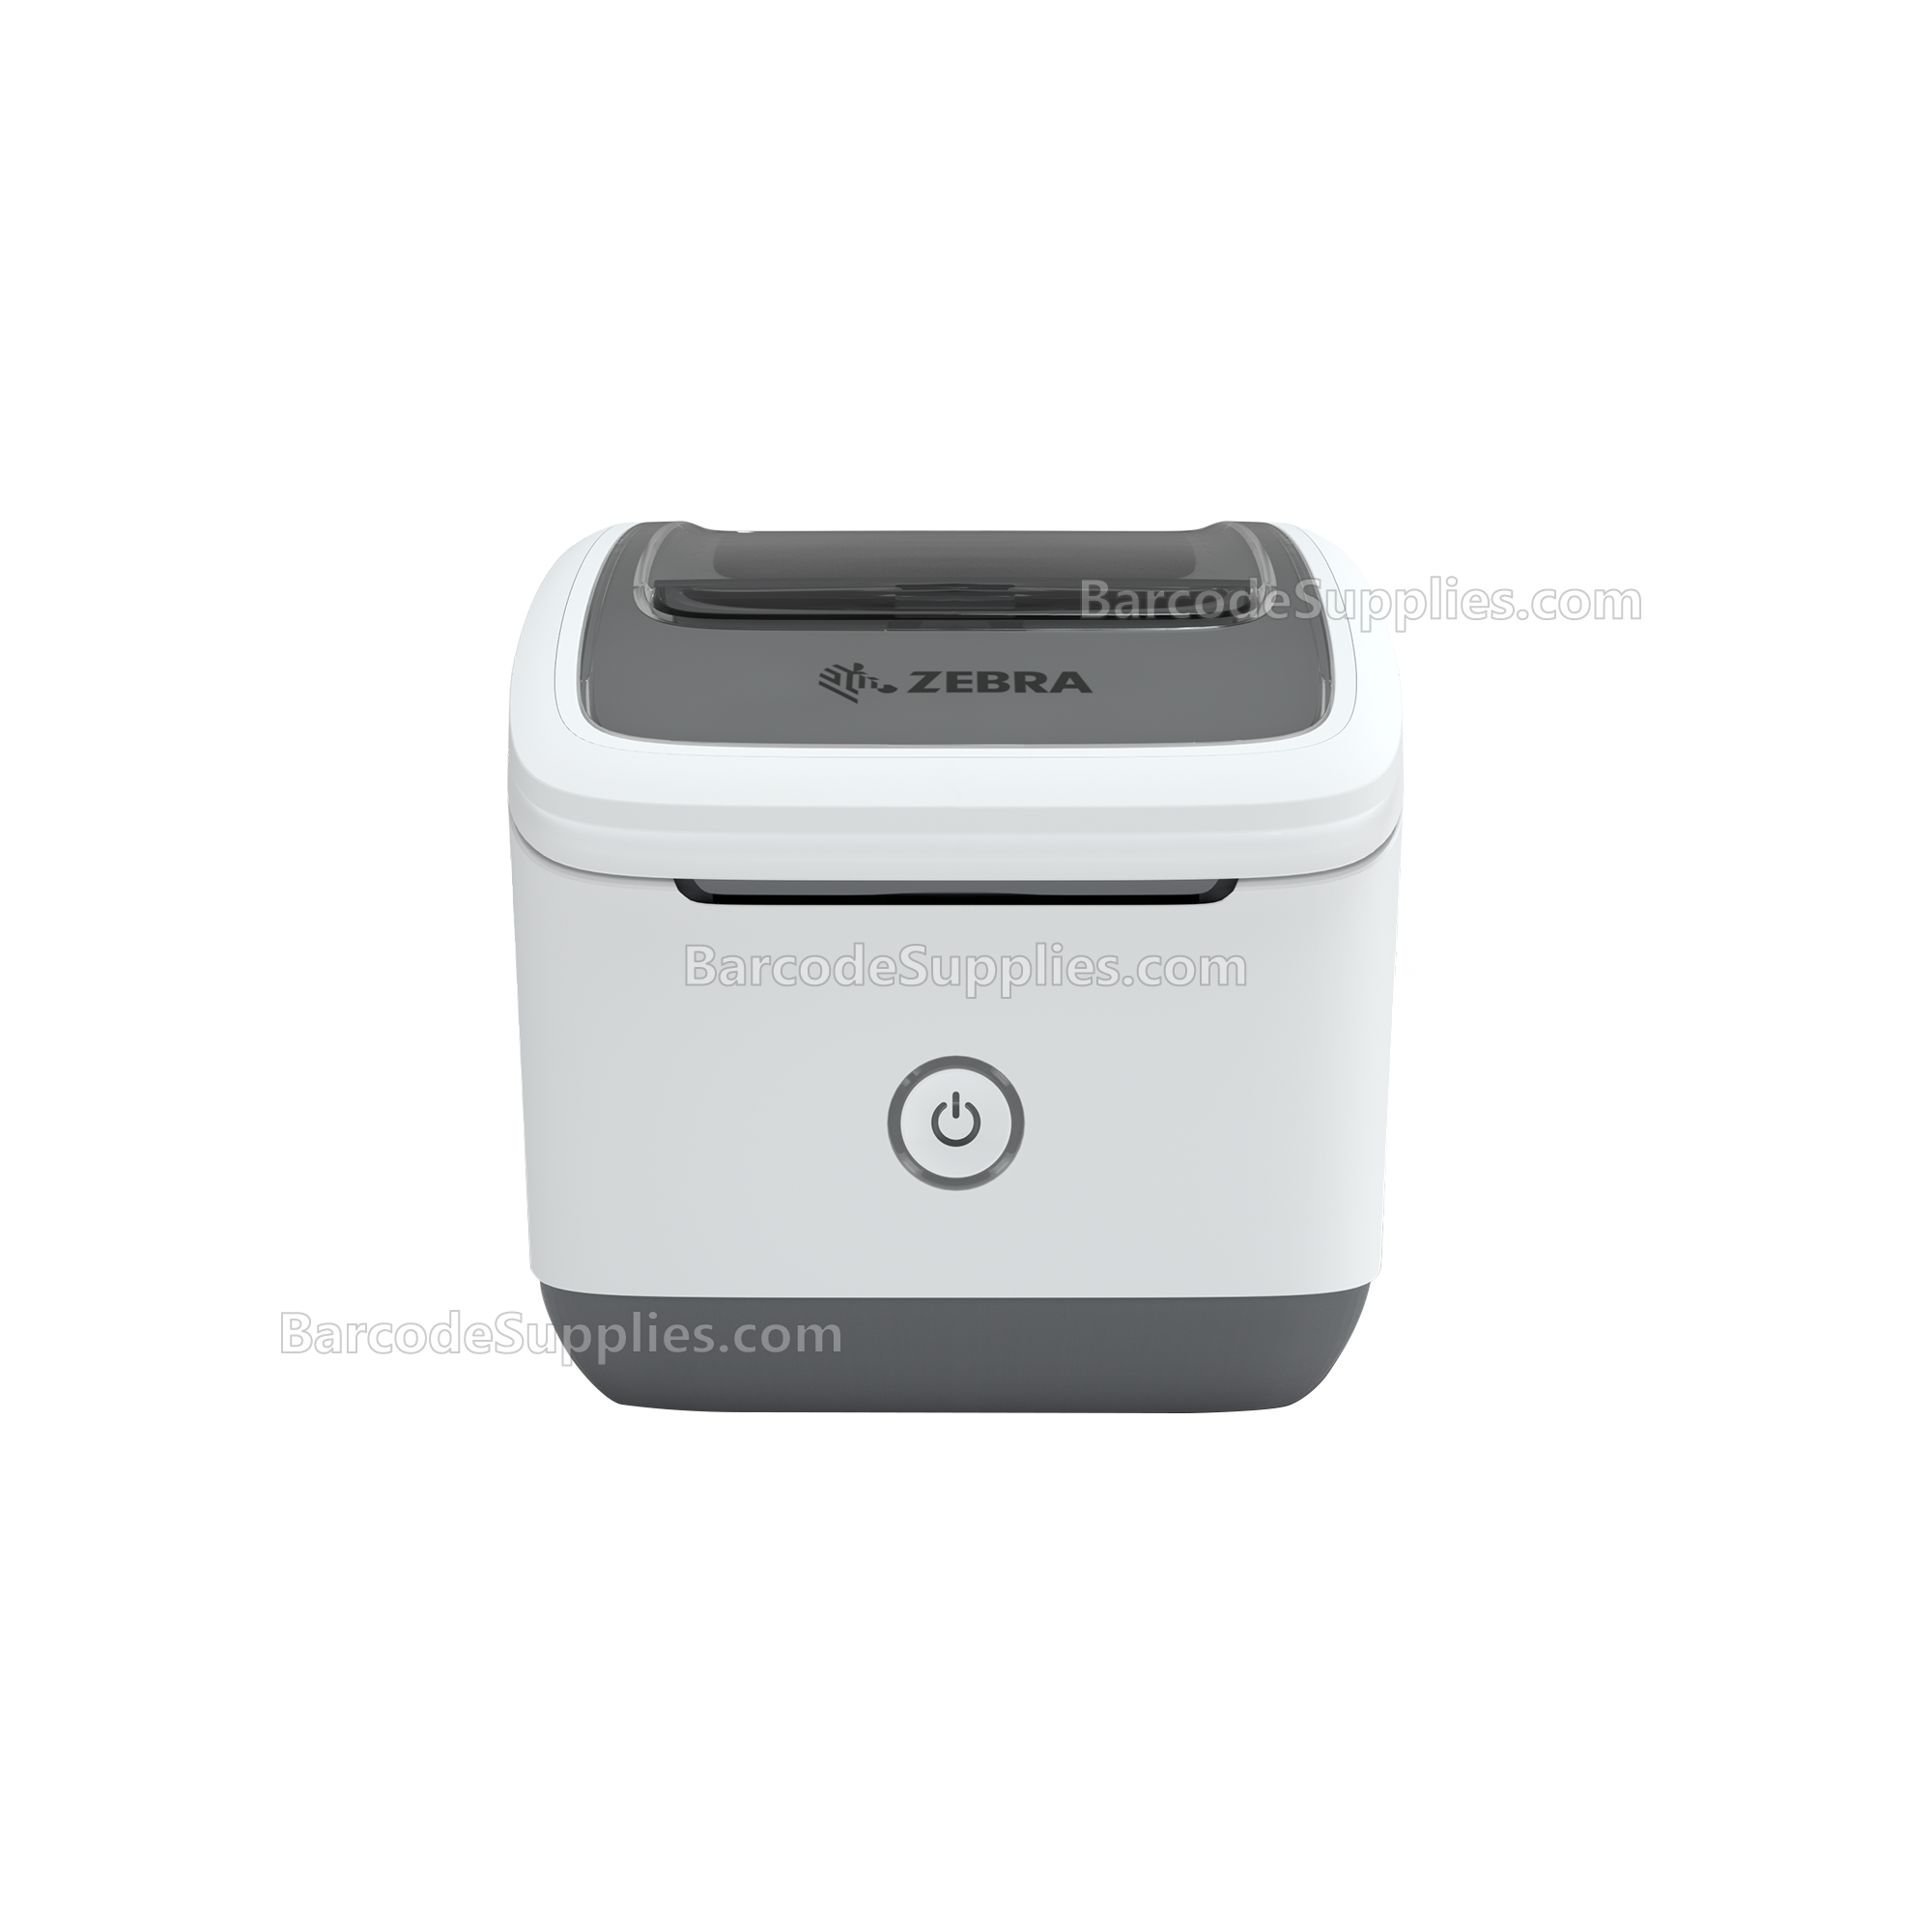 Zebra Zebra Small Business Printer, Base 2 DT 300 dpi, Smart Cartridge Media, US Cord, Bluetooth & Wi-Fi